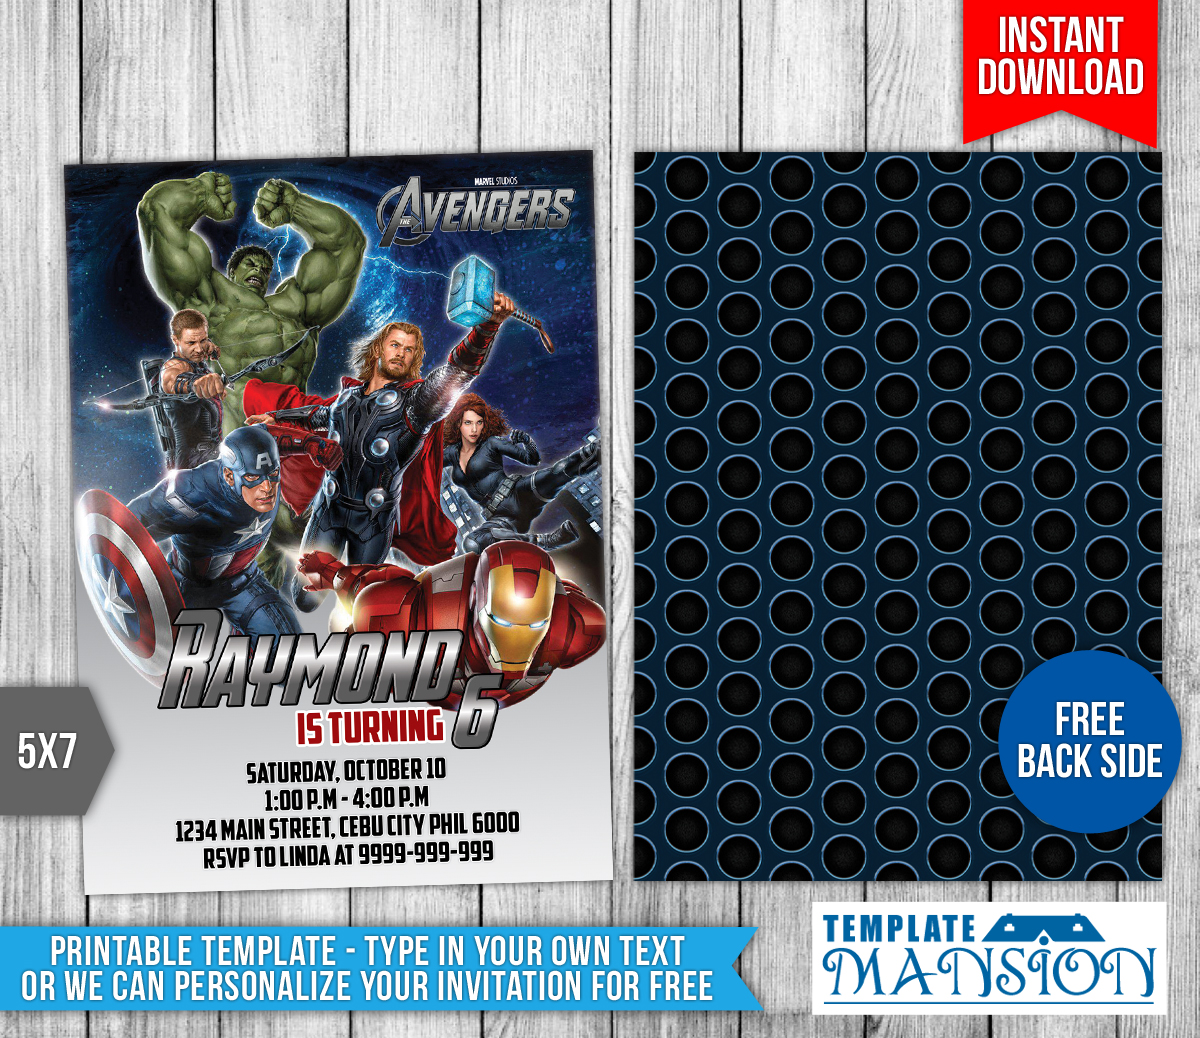 Avengers Birthday Invitation #21 by templatemansion on DeviantArt For Avengers Birthday Card Template